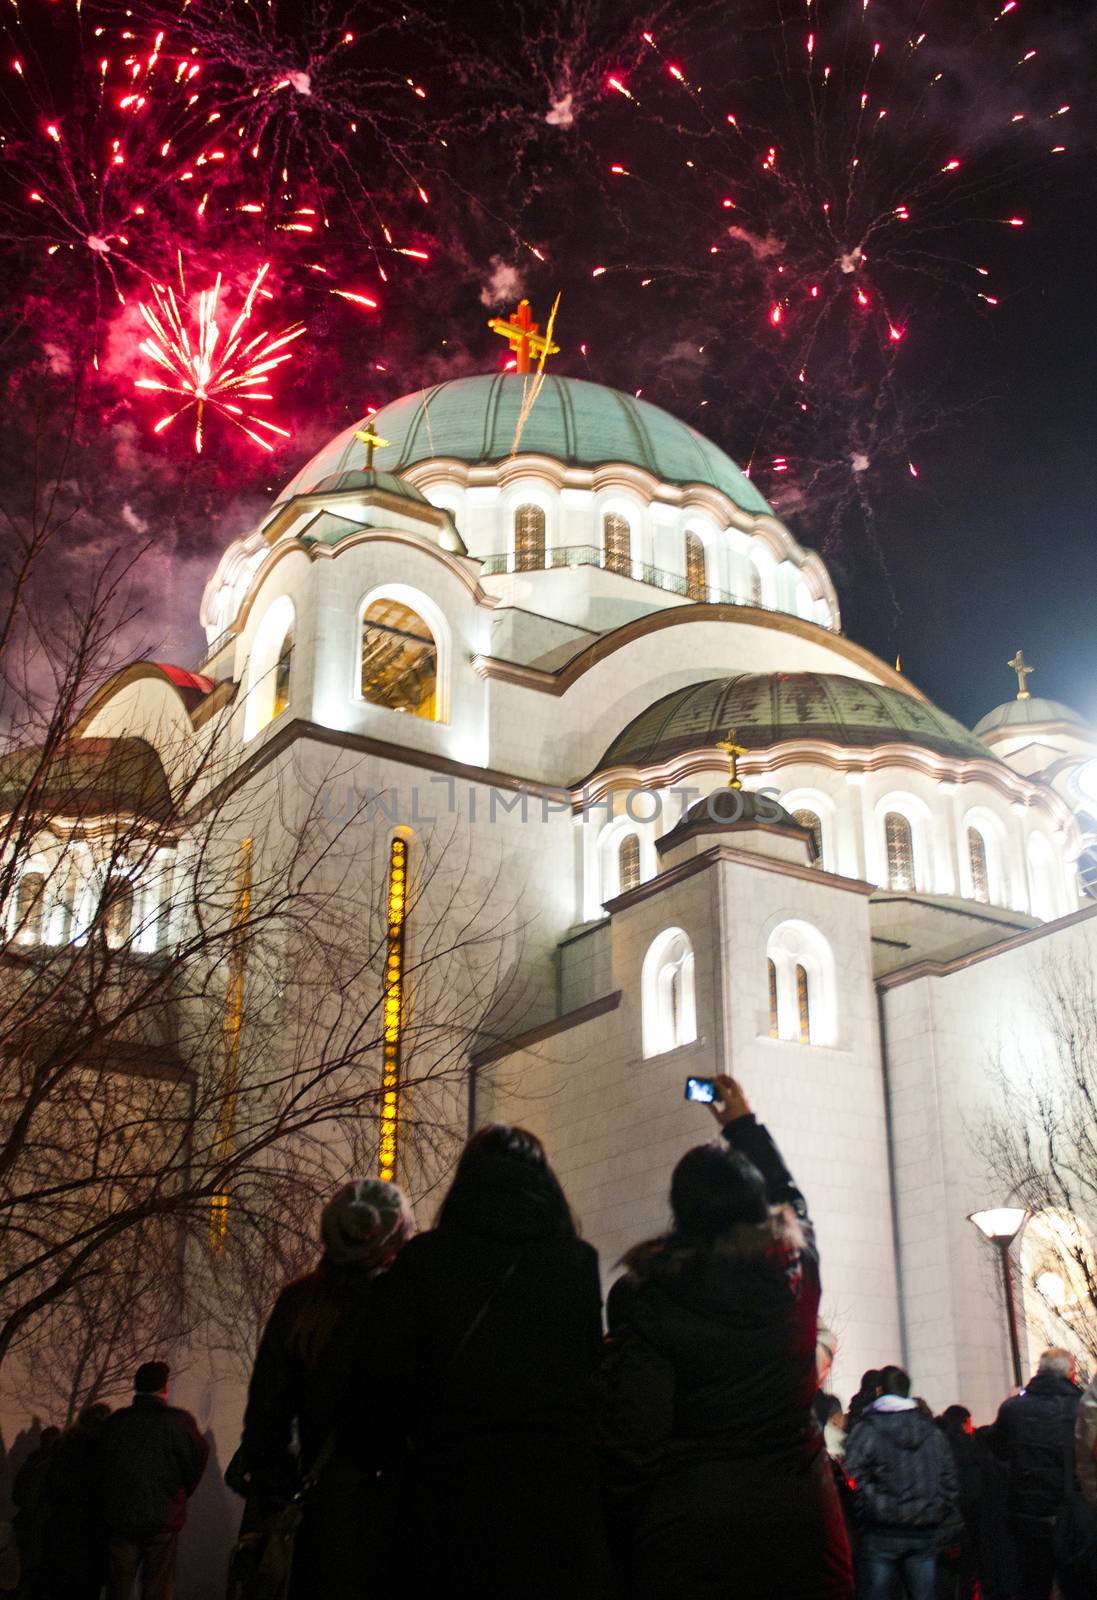 Serbian New years eve celebration by krutenyuk